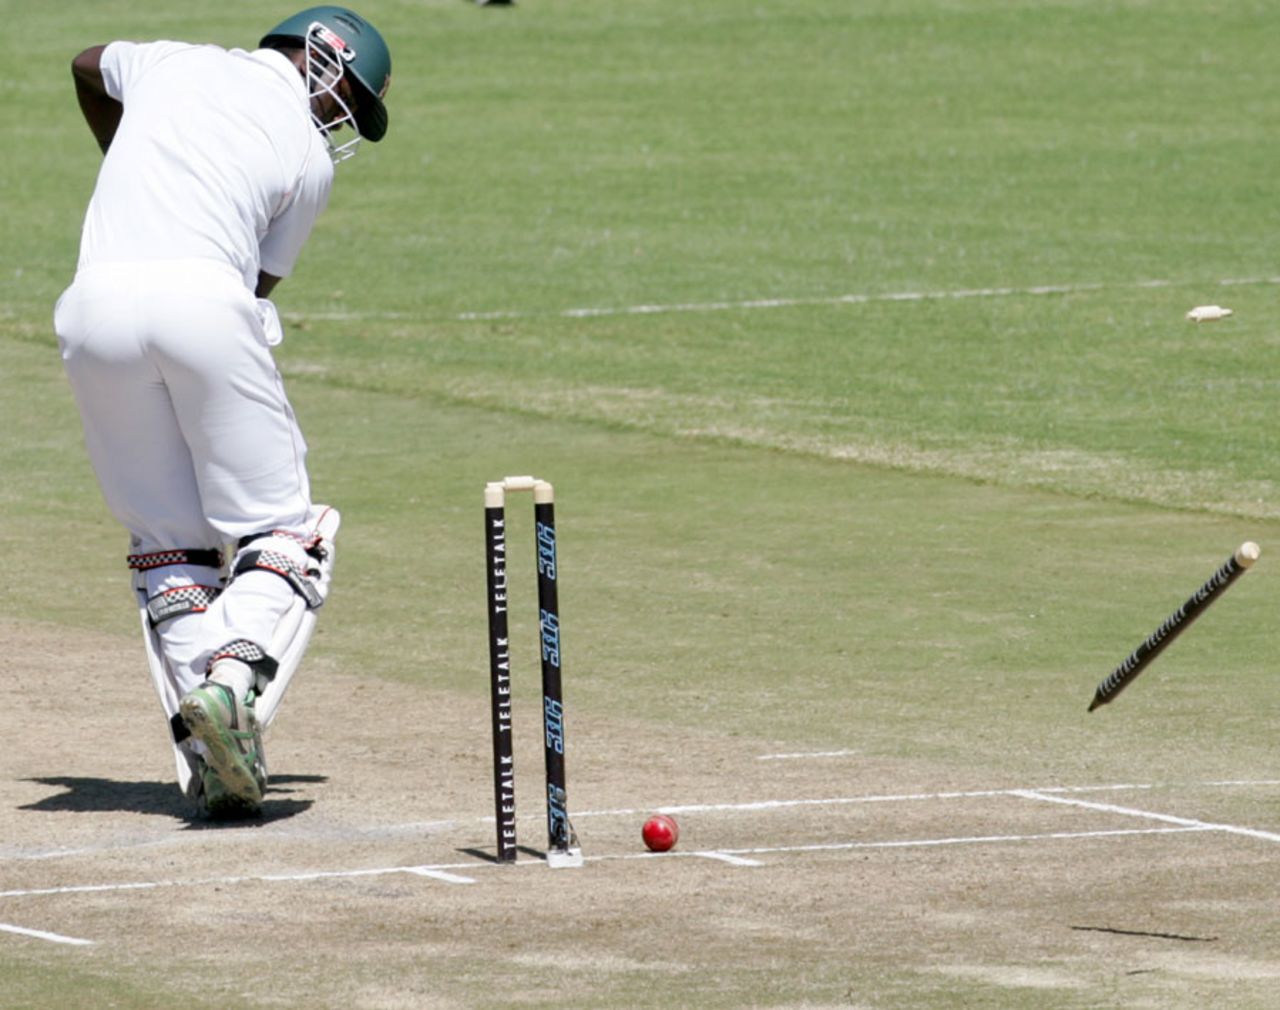 Elton Chigumbura is bowled by Robiul Islam, Zimbabwe v Bangladesh, 2nd Test, Harare, 3rd day, April 27, 2013